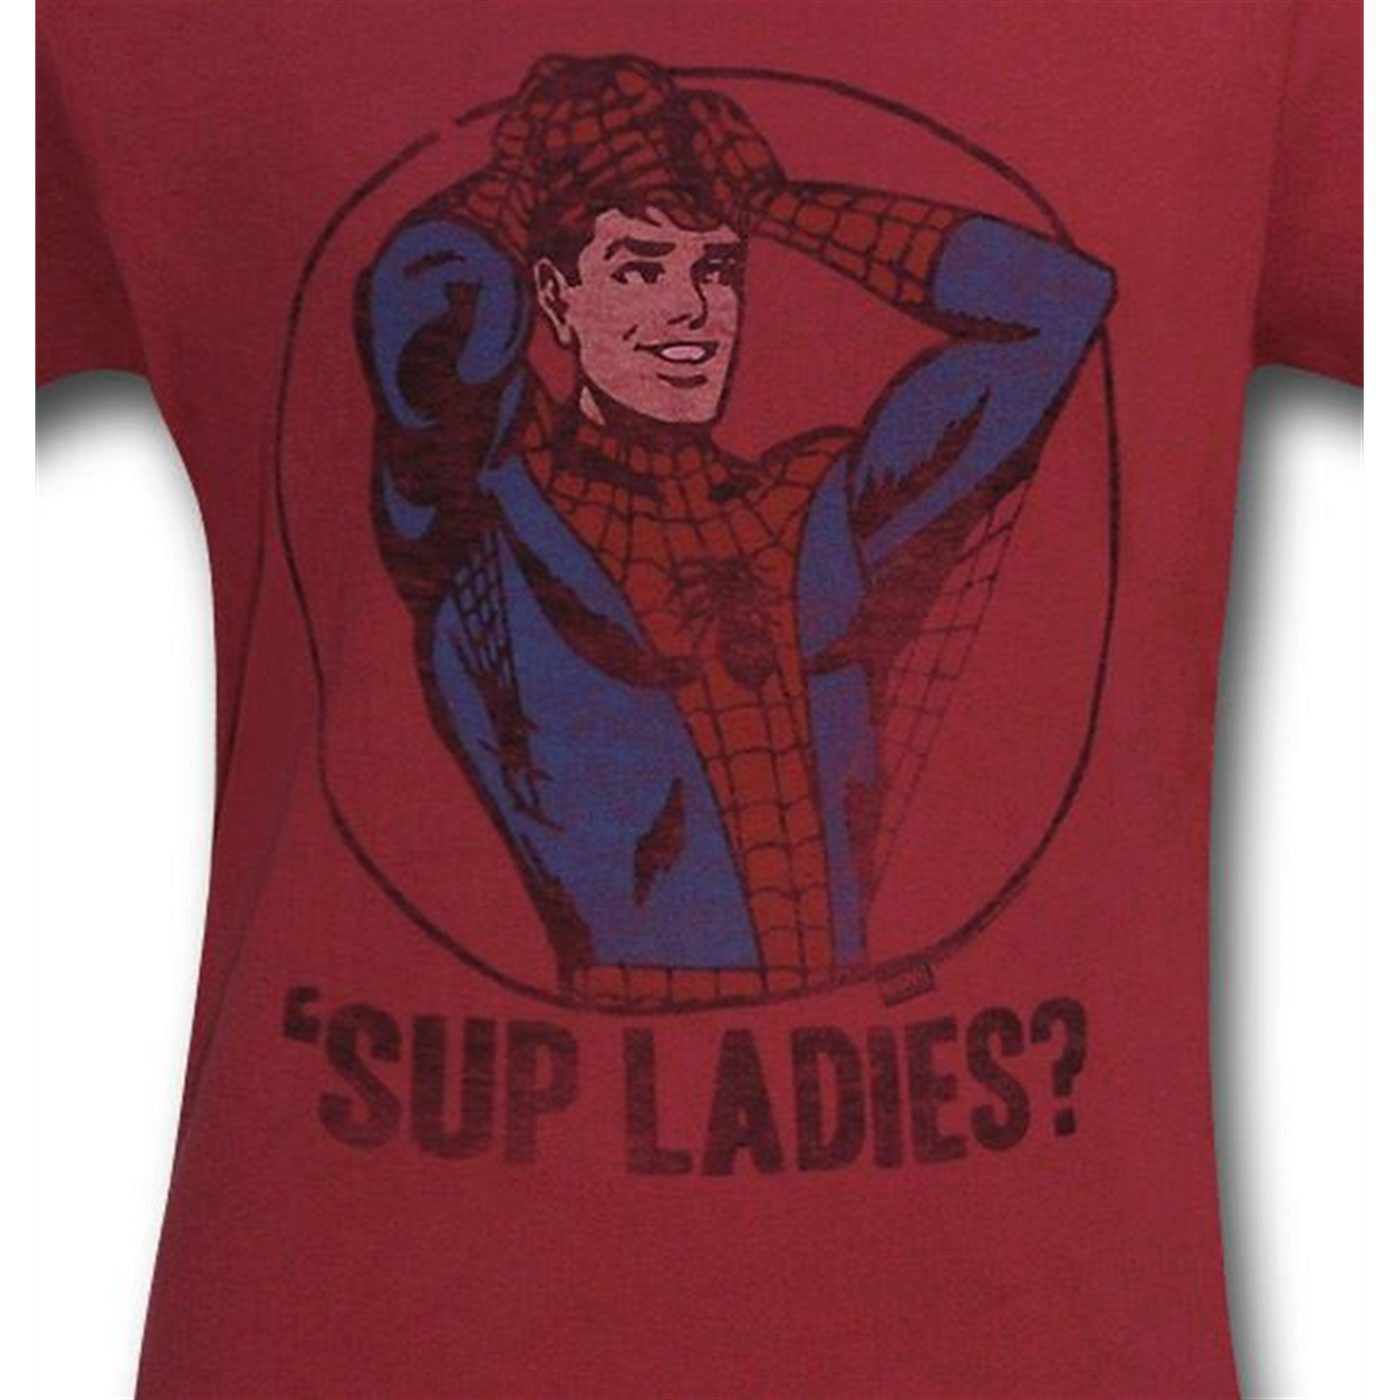 Spiderman 'Sup Ladies Junk Food T-Shirt